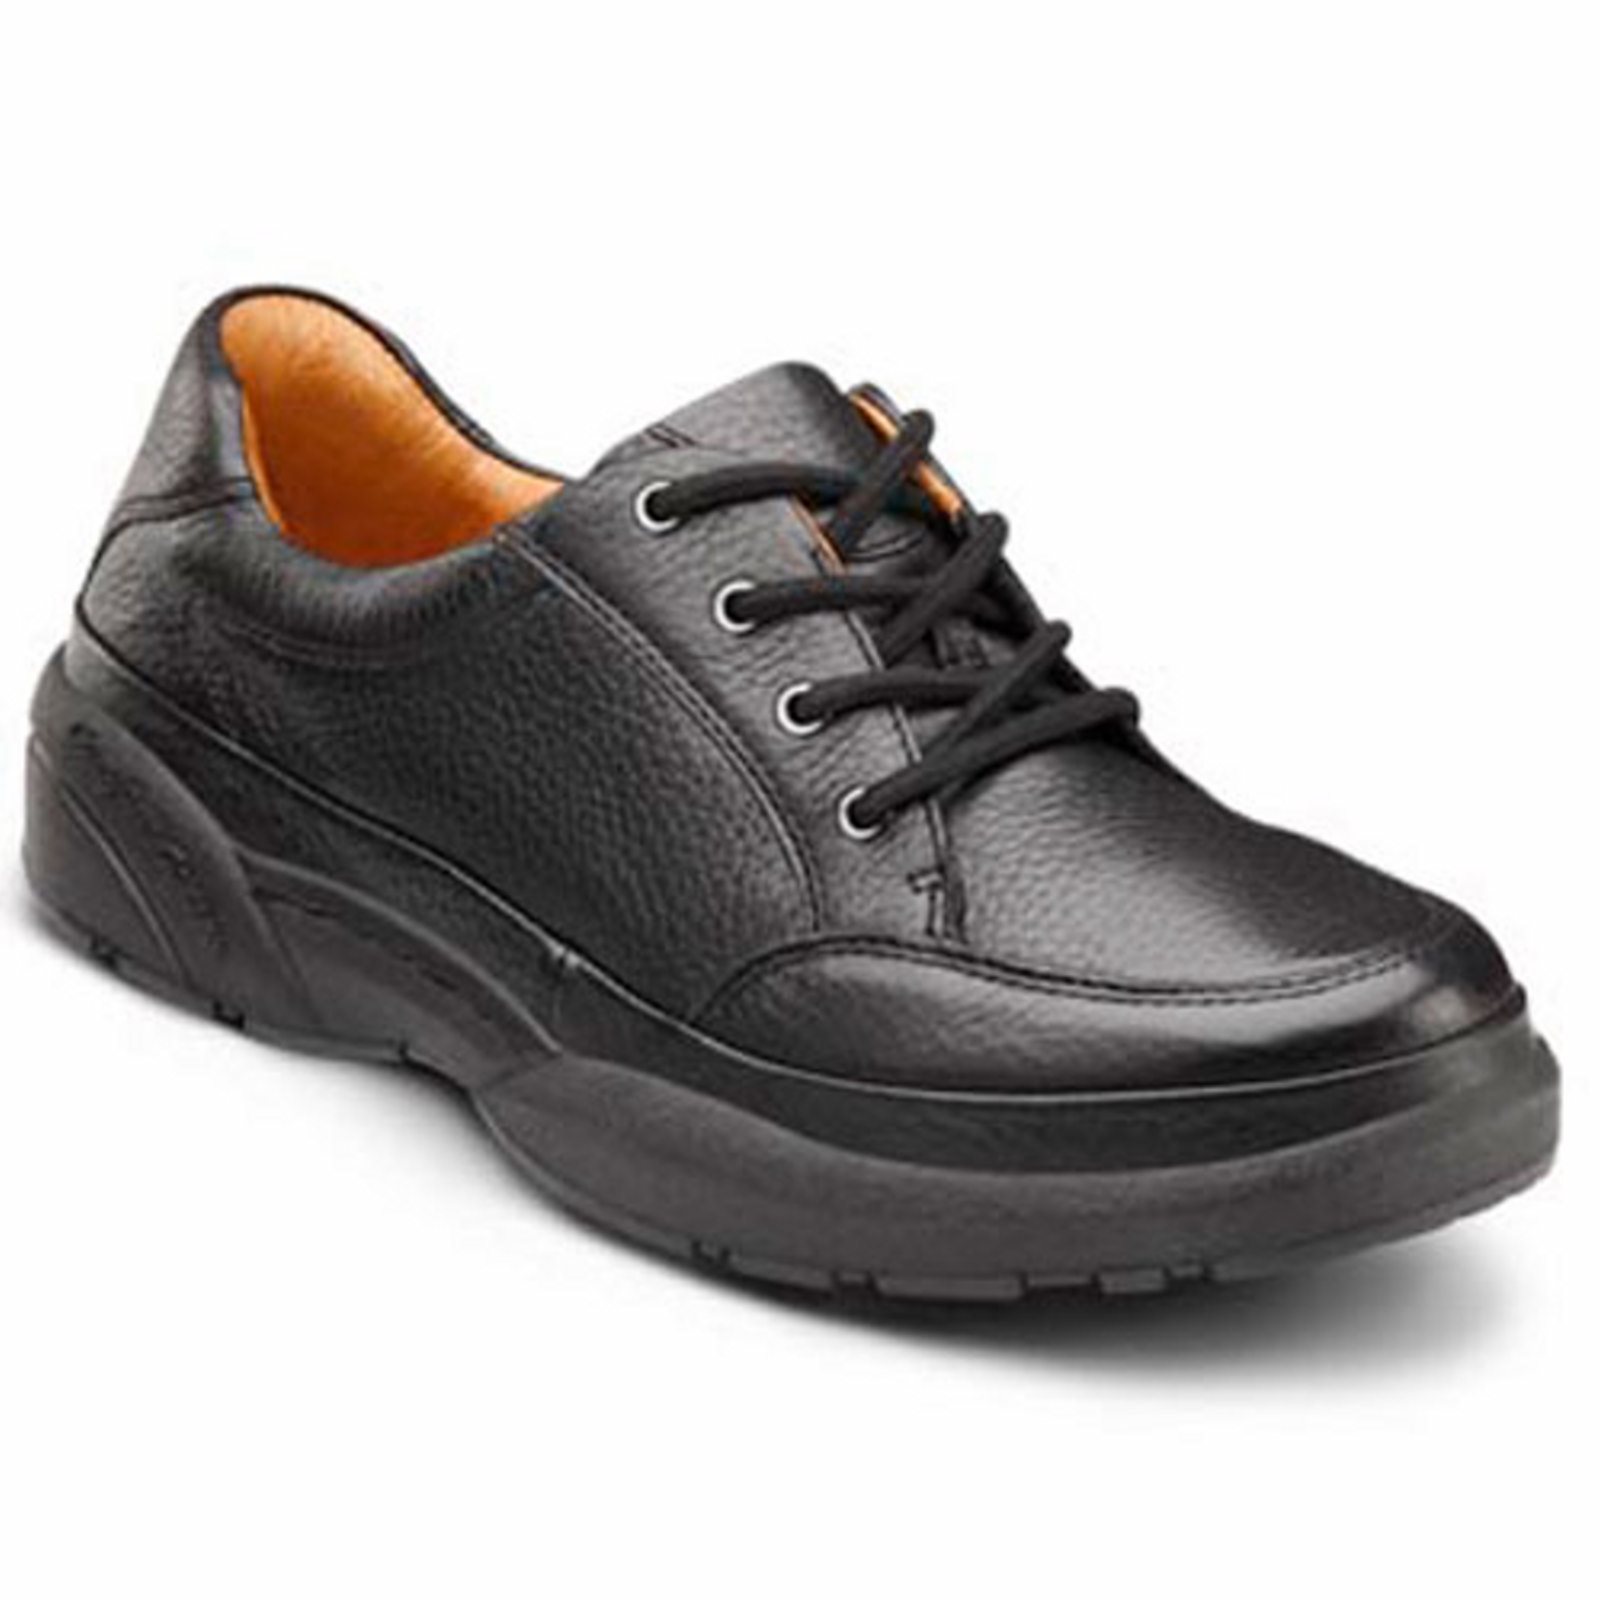 Dr. Comfort Justin Men's Casual Shoe: 6.5 Medium (B/D) Black Lace - image 1 of 5